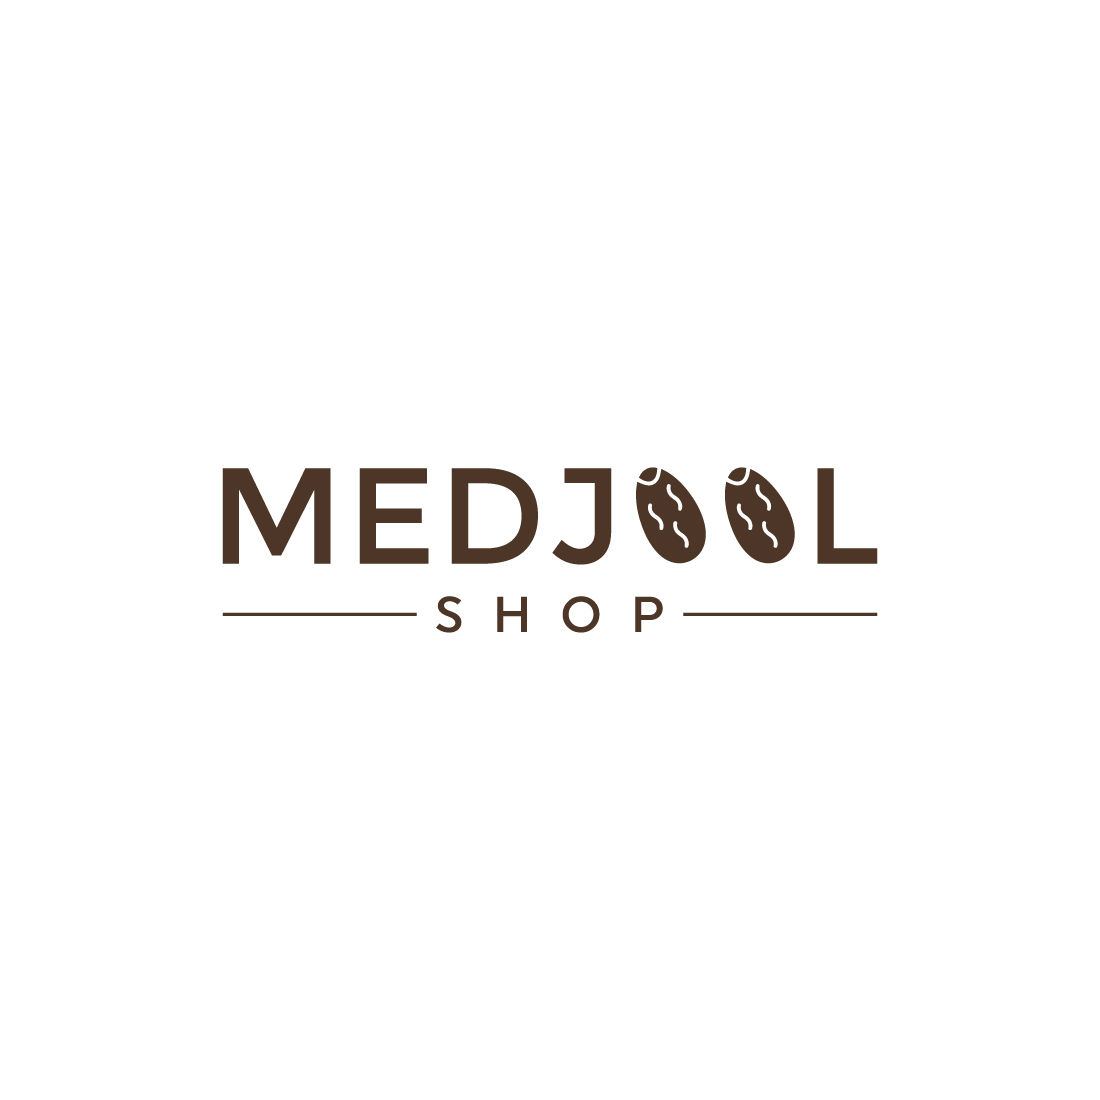 Medjool Shop Logo Vector Design Template main cover.